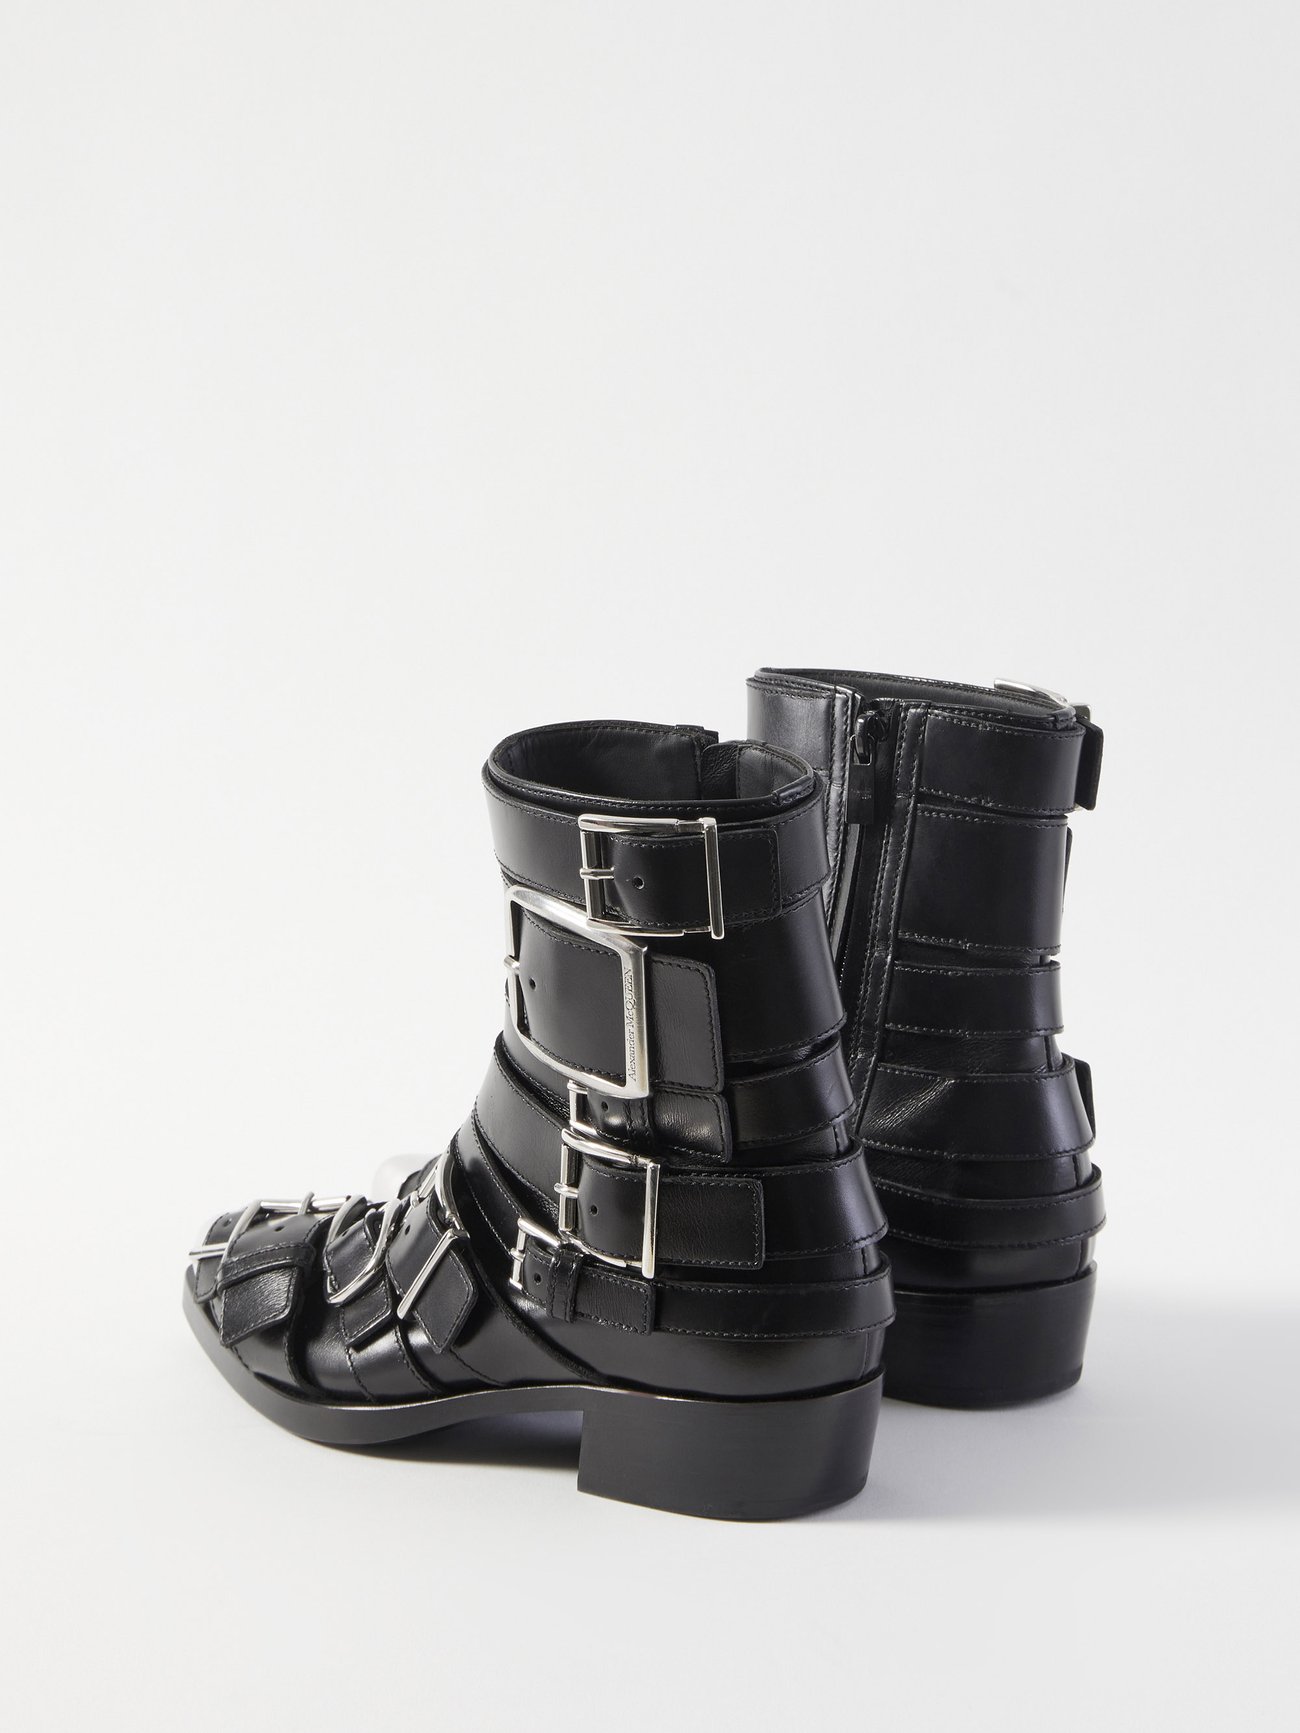 Alexander McQueen 'Punk' Ankle Boots Black Silver